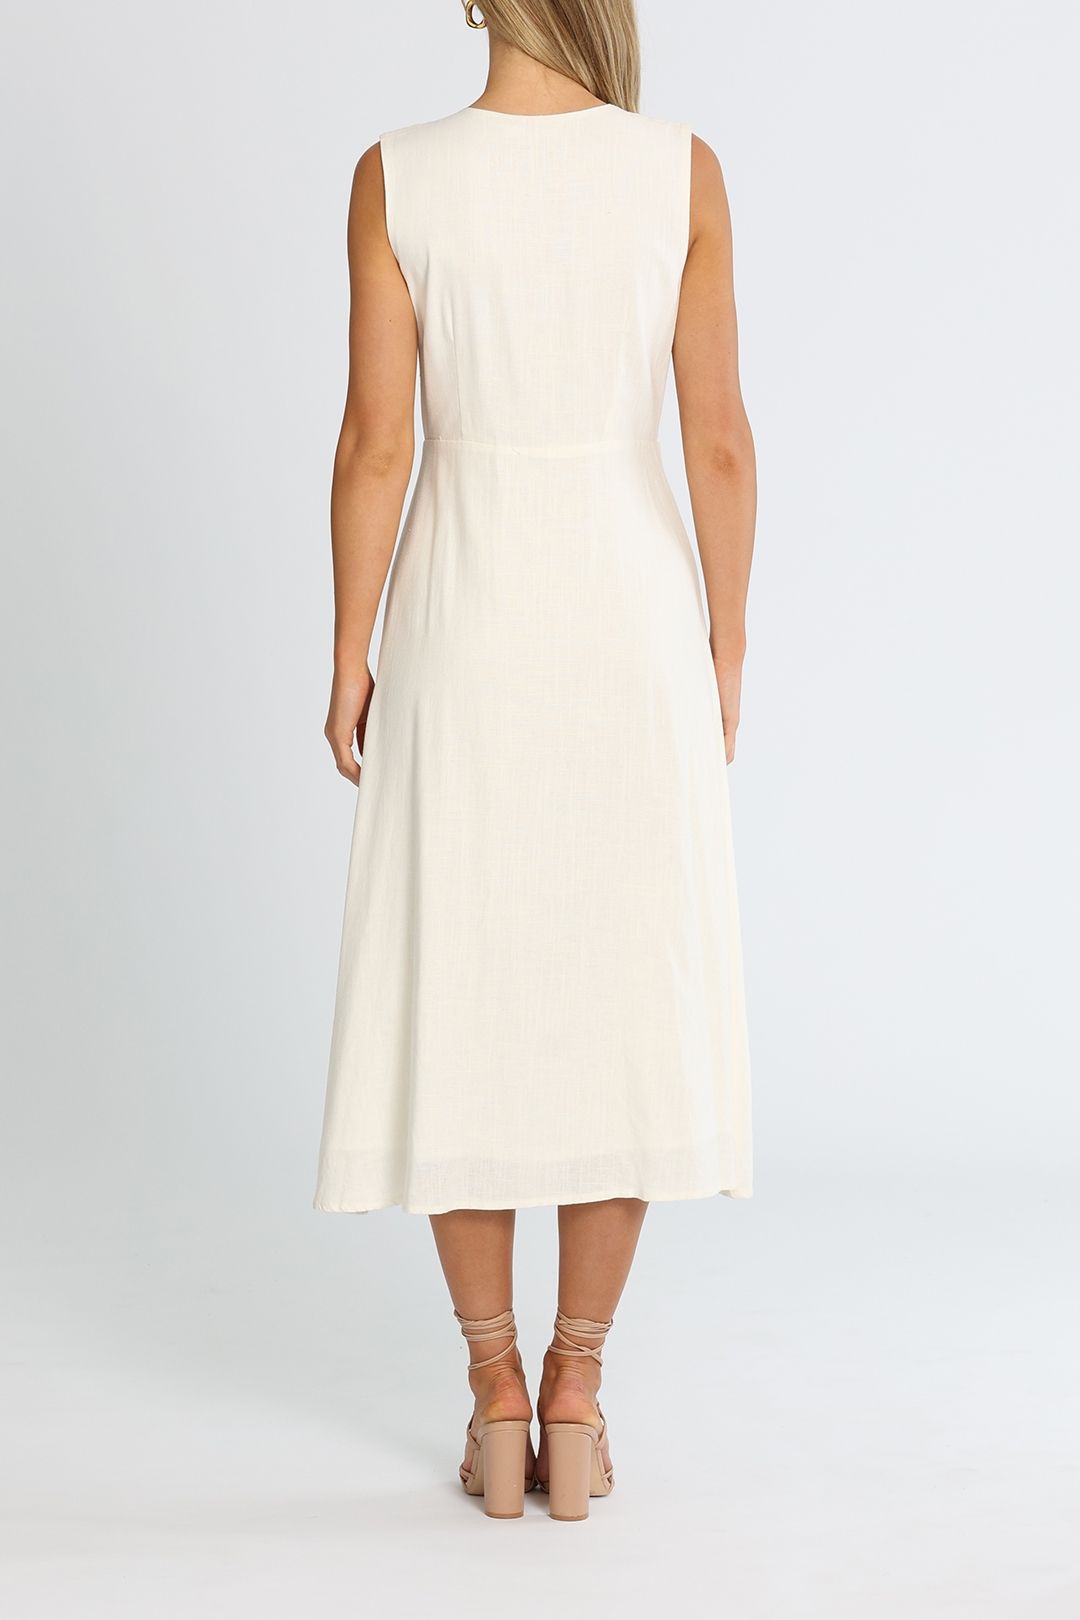 Girl and the Sun Portofino White Sleeveless Midi Dress Flared Skirt